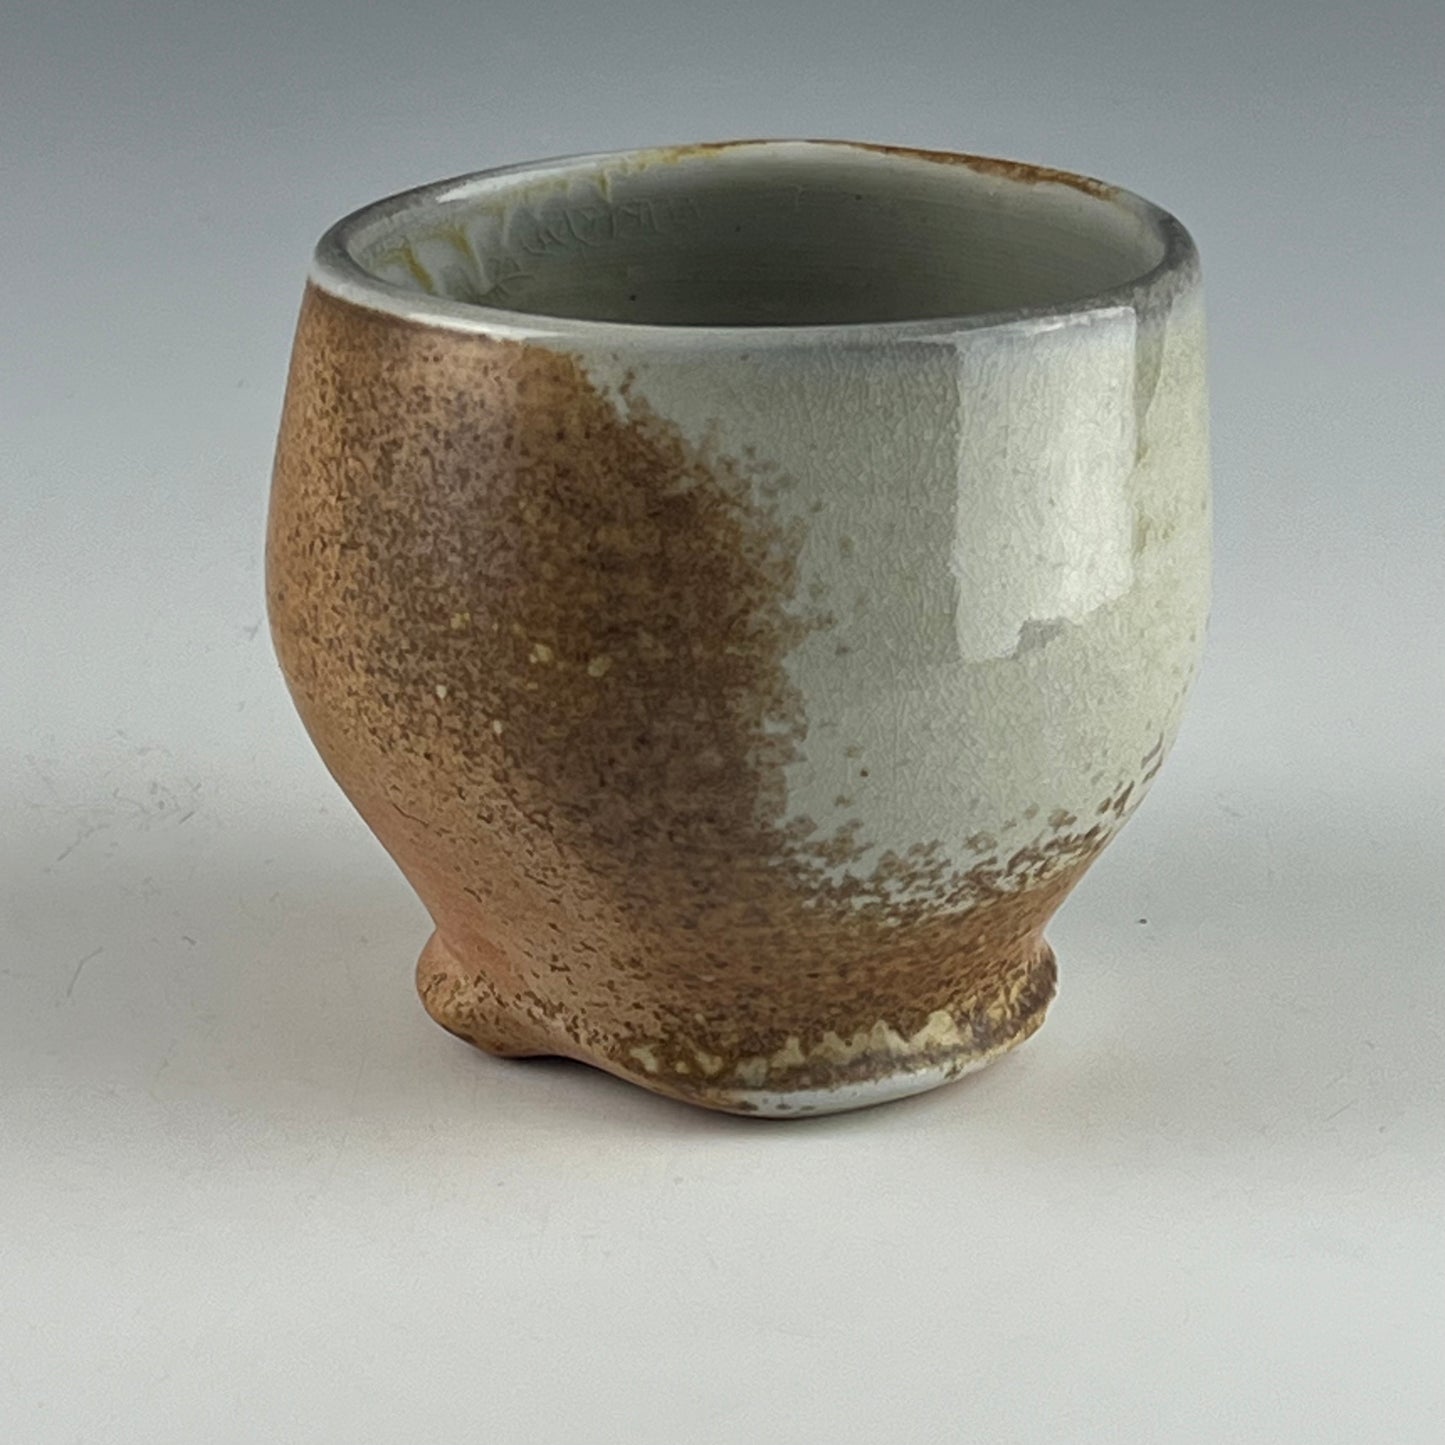 Porcelain wine cup or tea bowl